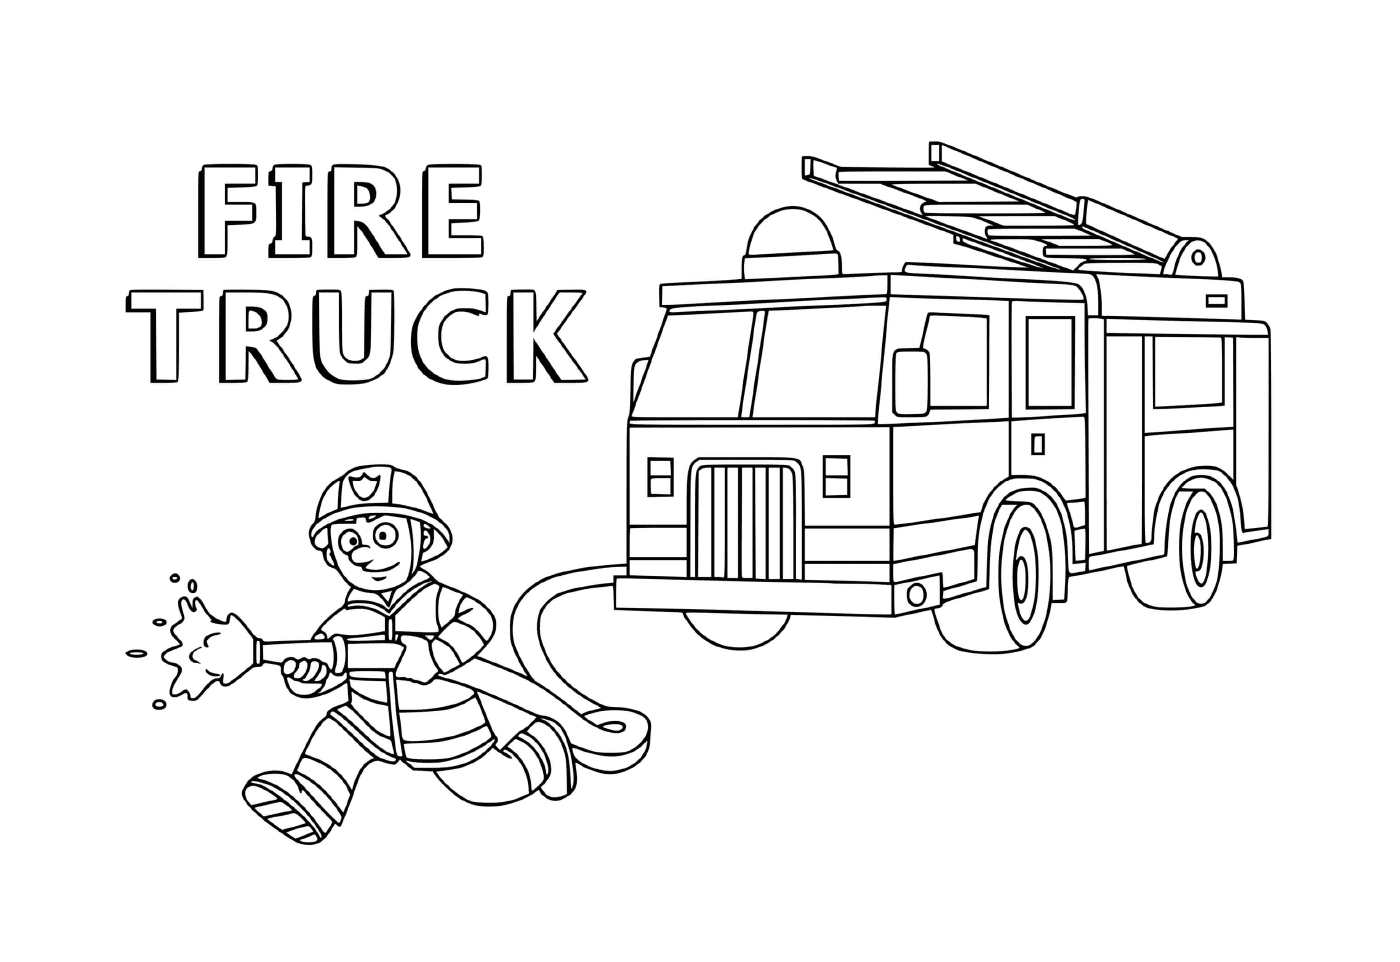  Грузовик пожарного, обслуживающий граждан 